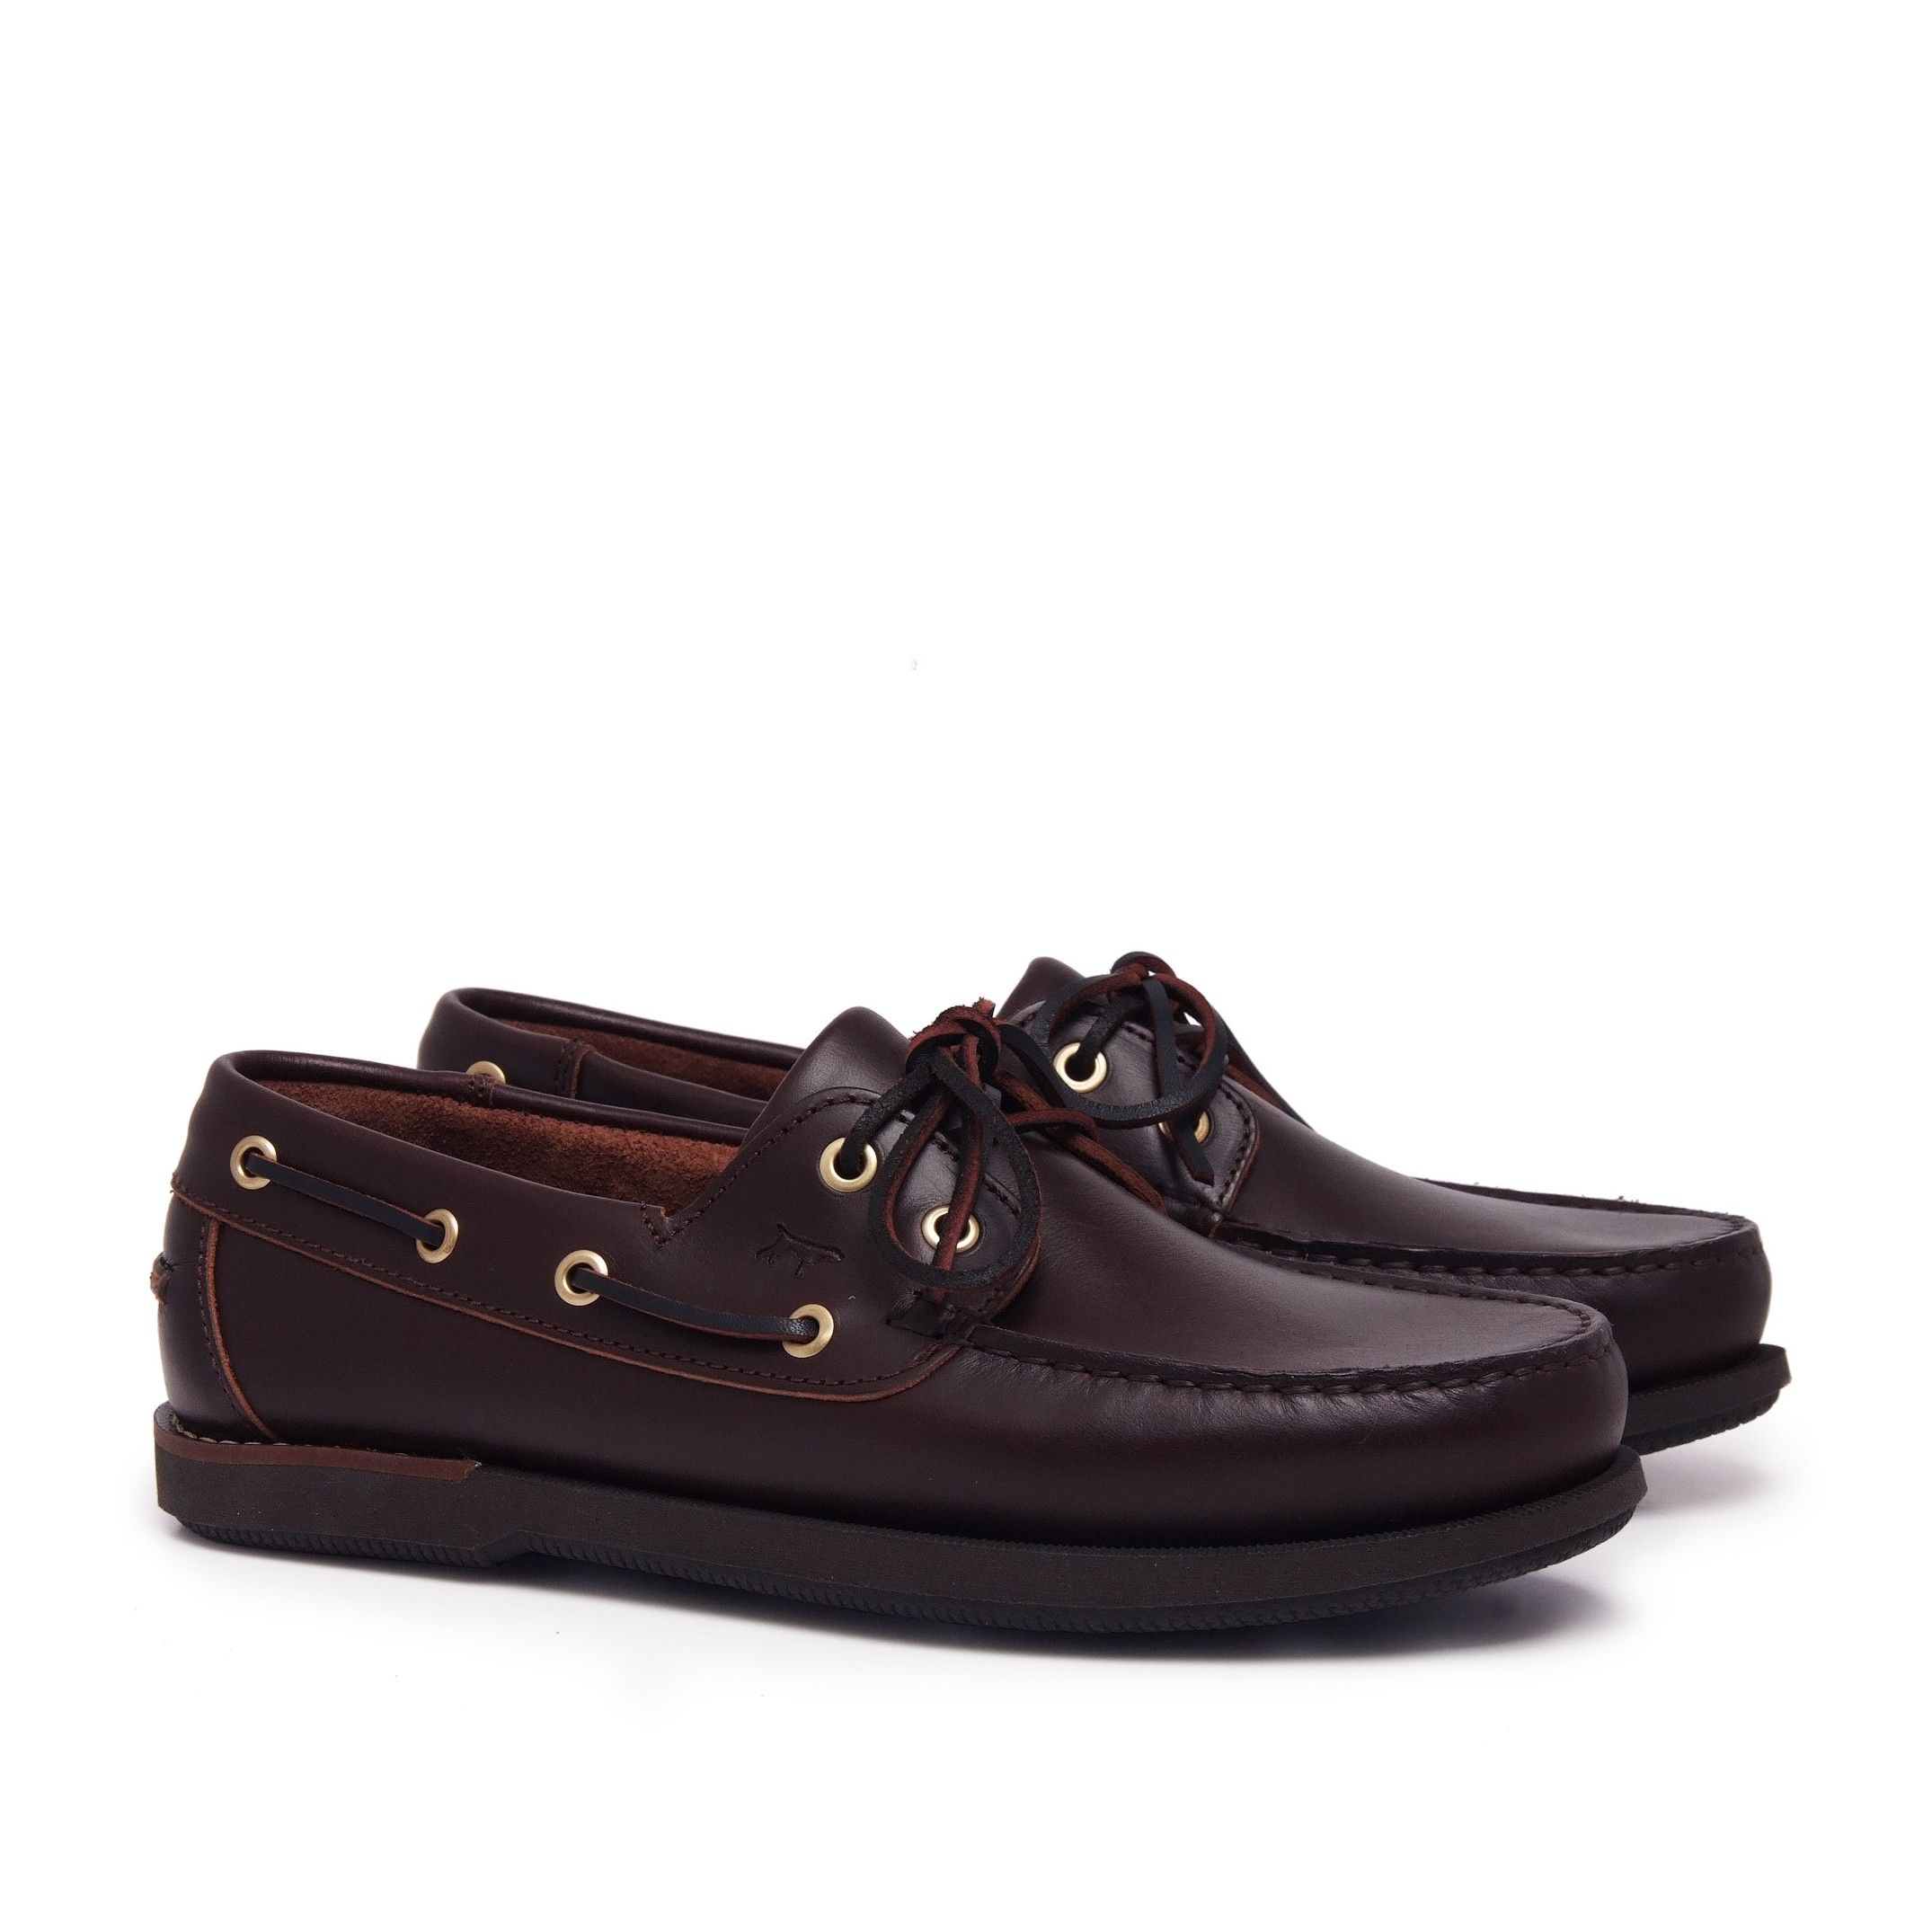 Leather Boat Shoes for Men Castellanisimos